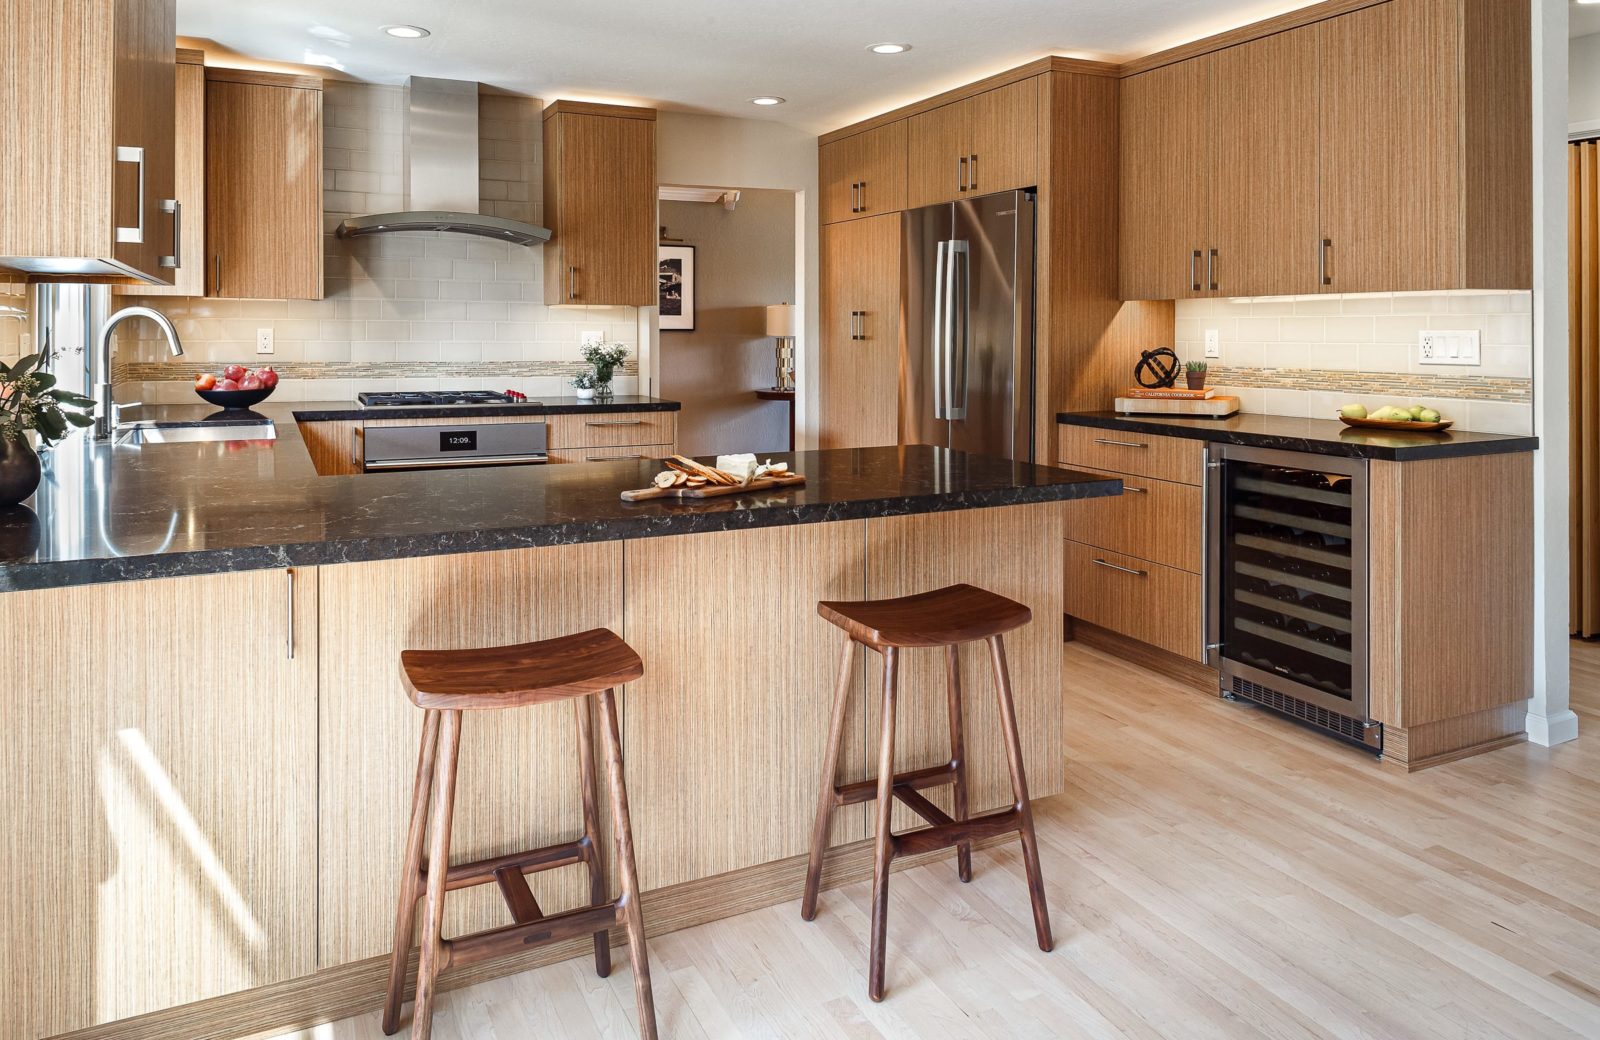 Transitional kitchen with peninsula and wine fridge